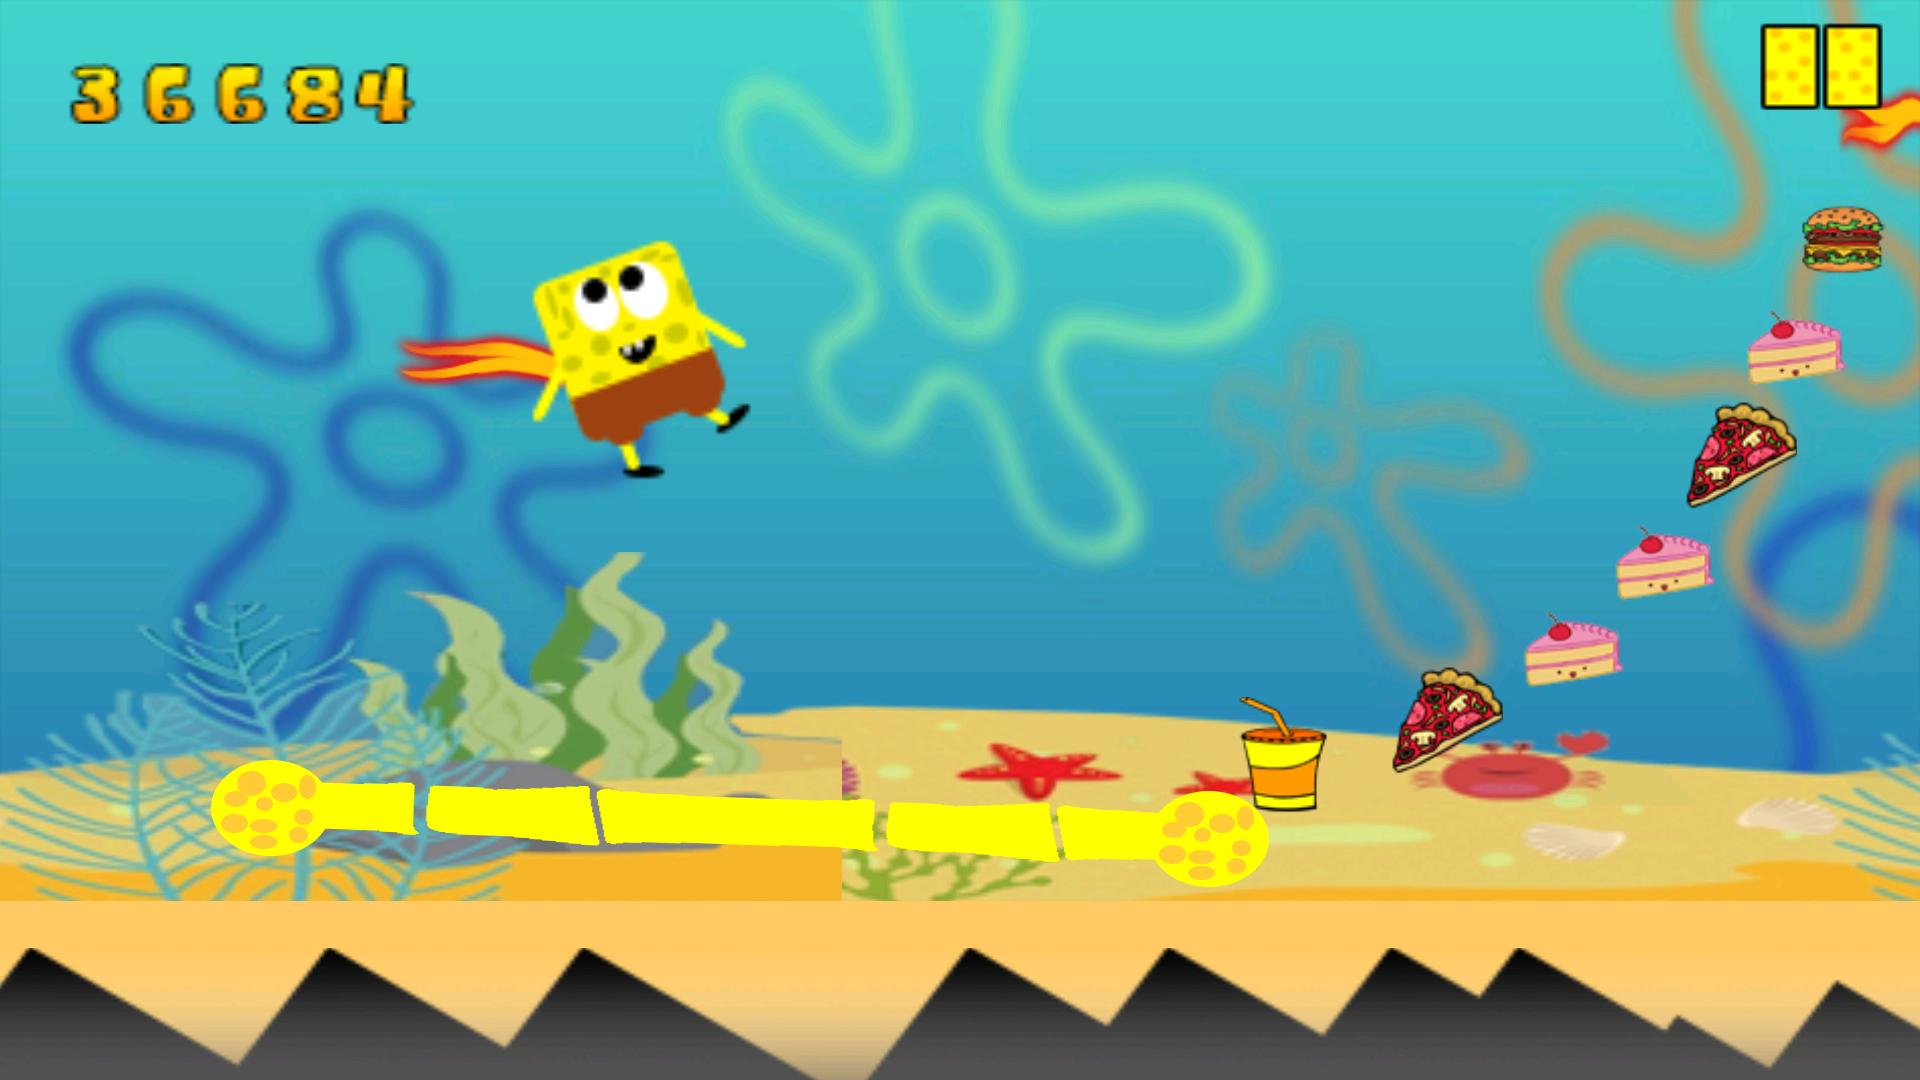 Flying Spongebob For Android Apk Download - download roblox adventures escape evil spongebob